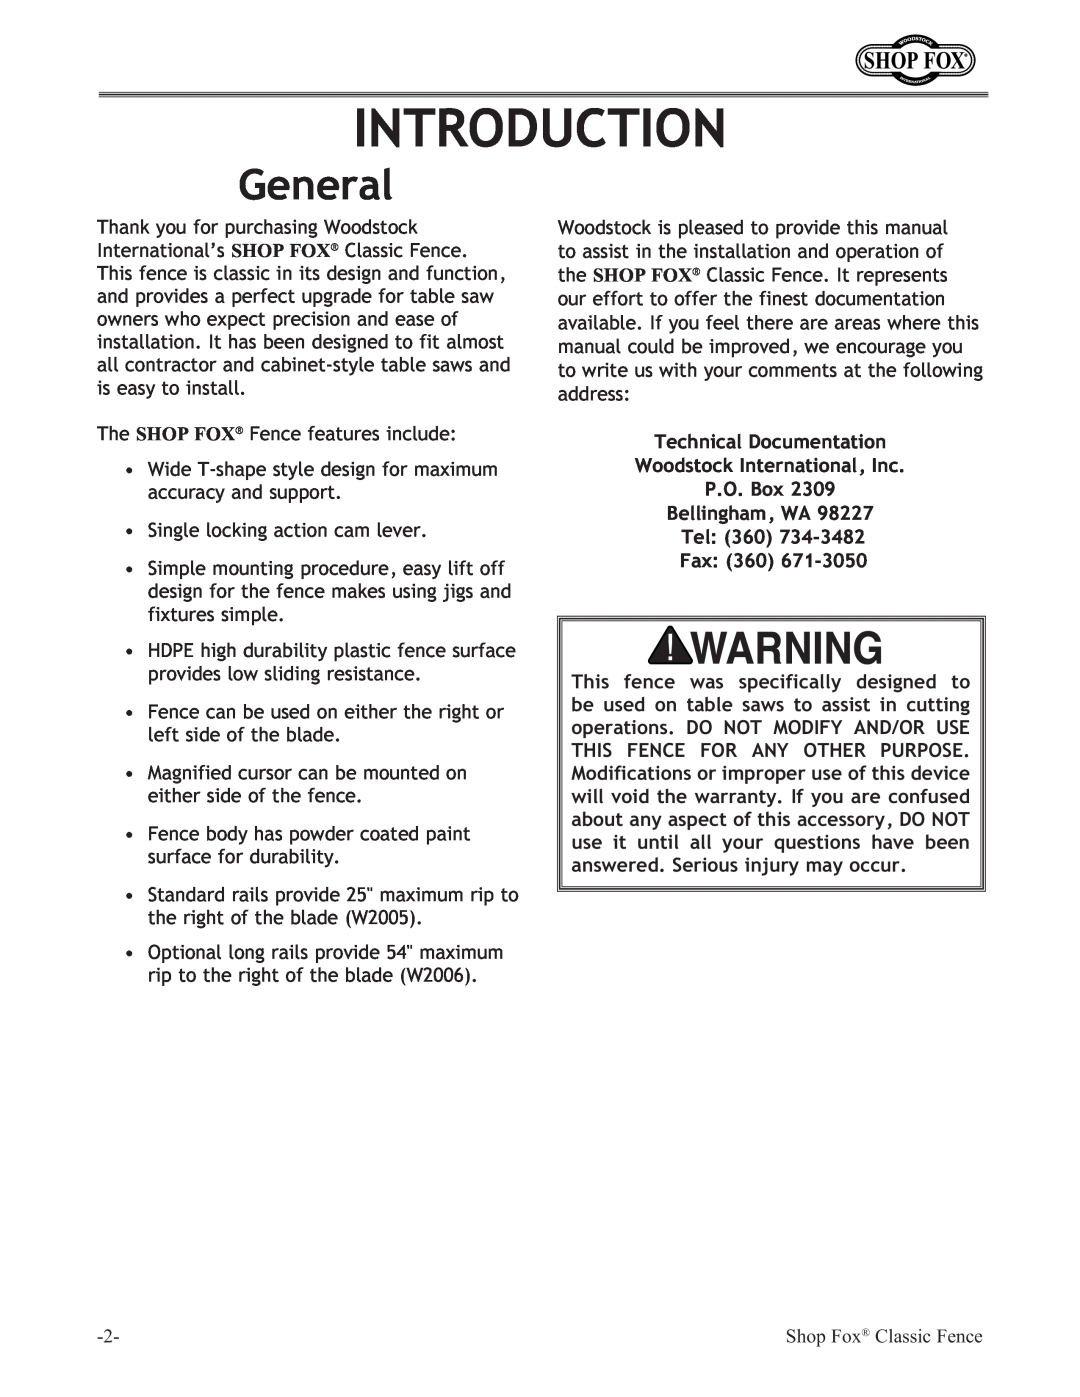 Woodstock W2005 instruction manual Introduction, General, Technical Documentation, Woodstock International, Inc P.O. Box 